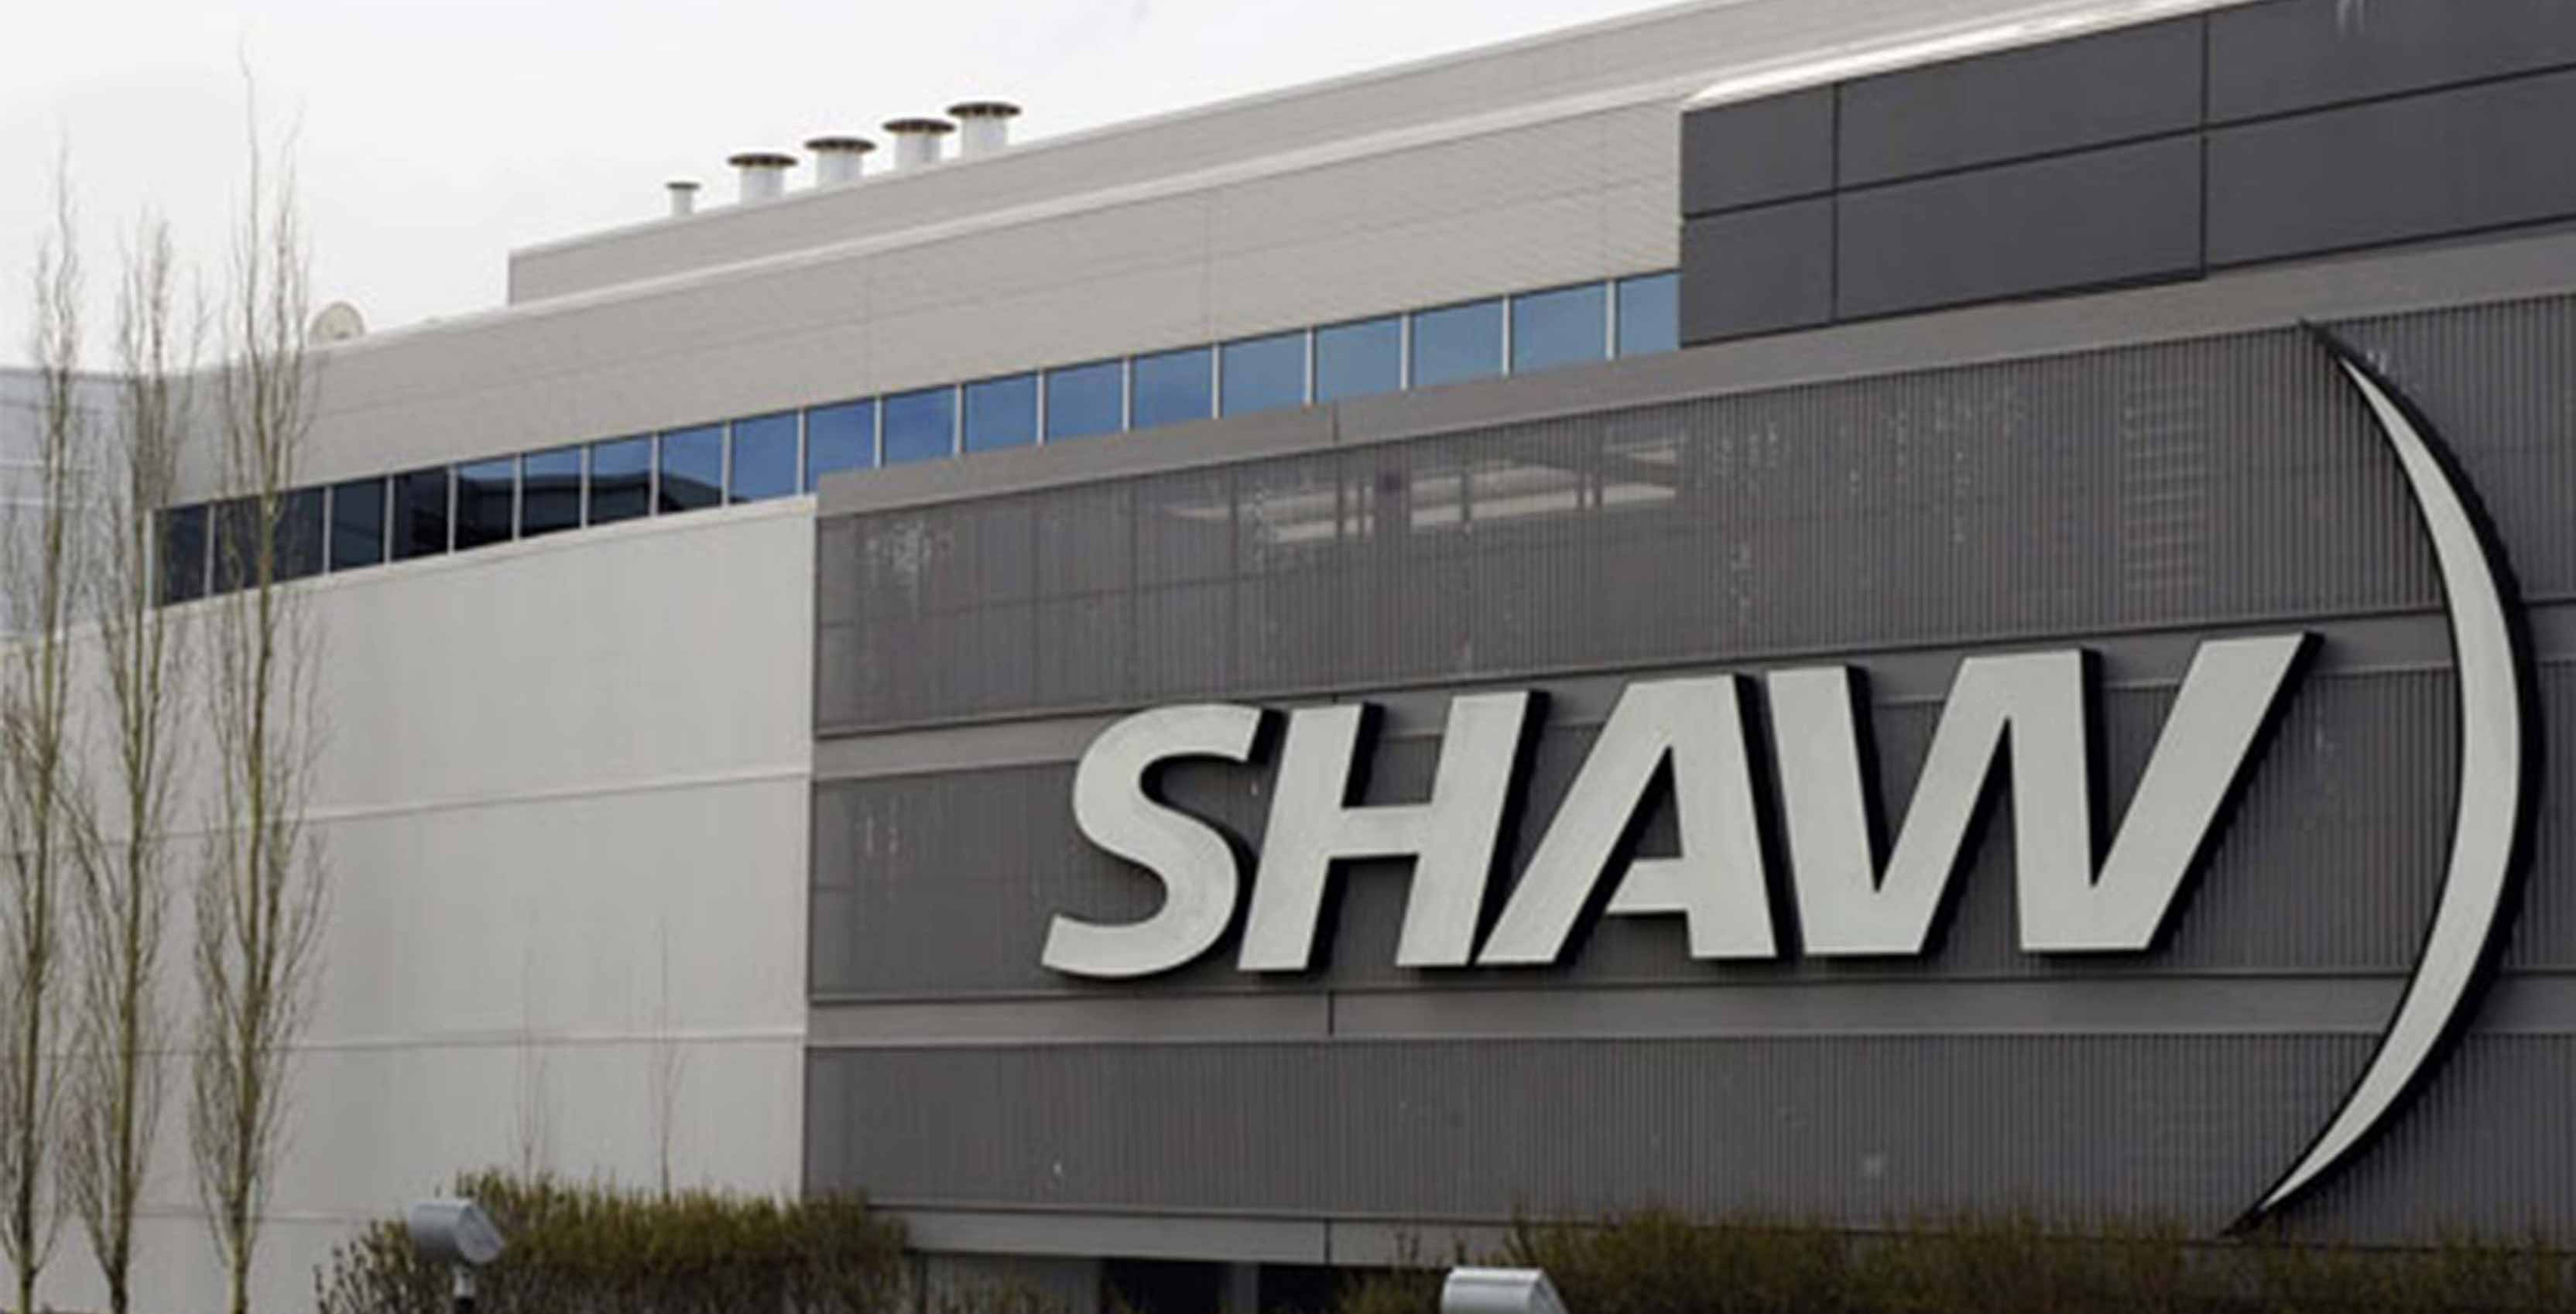 Shaw logo on building